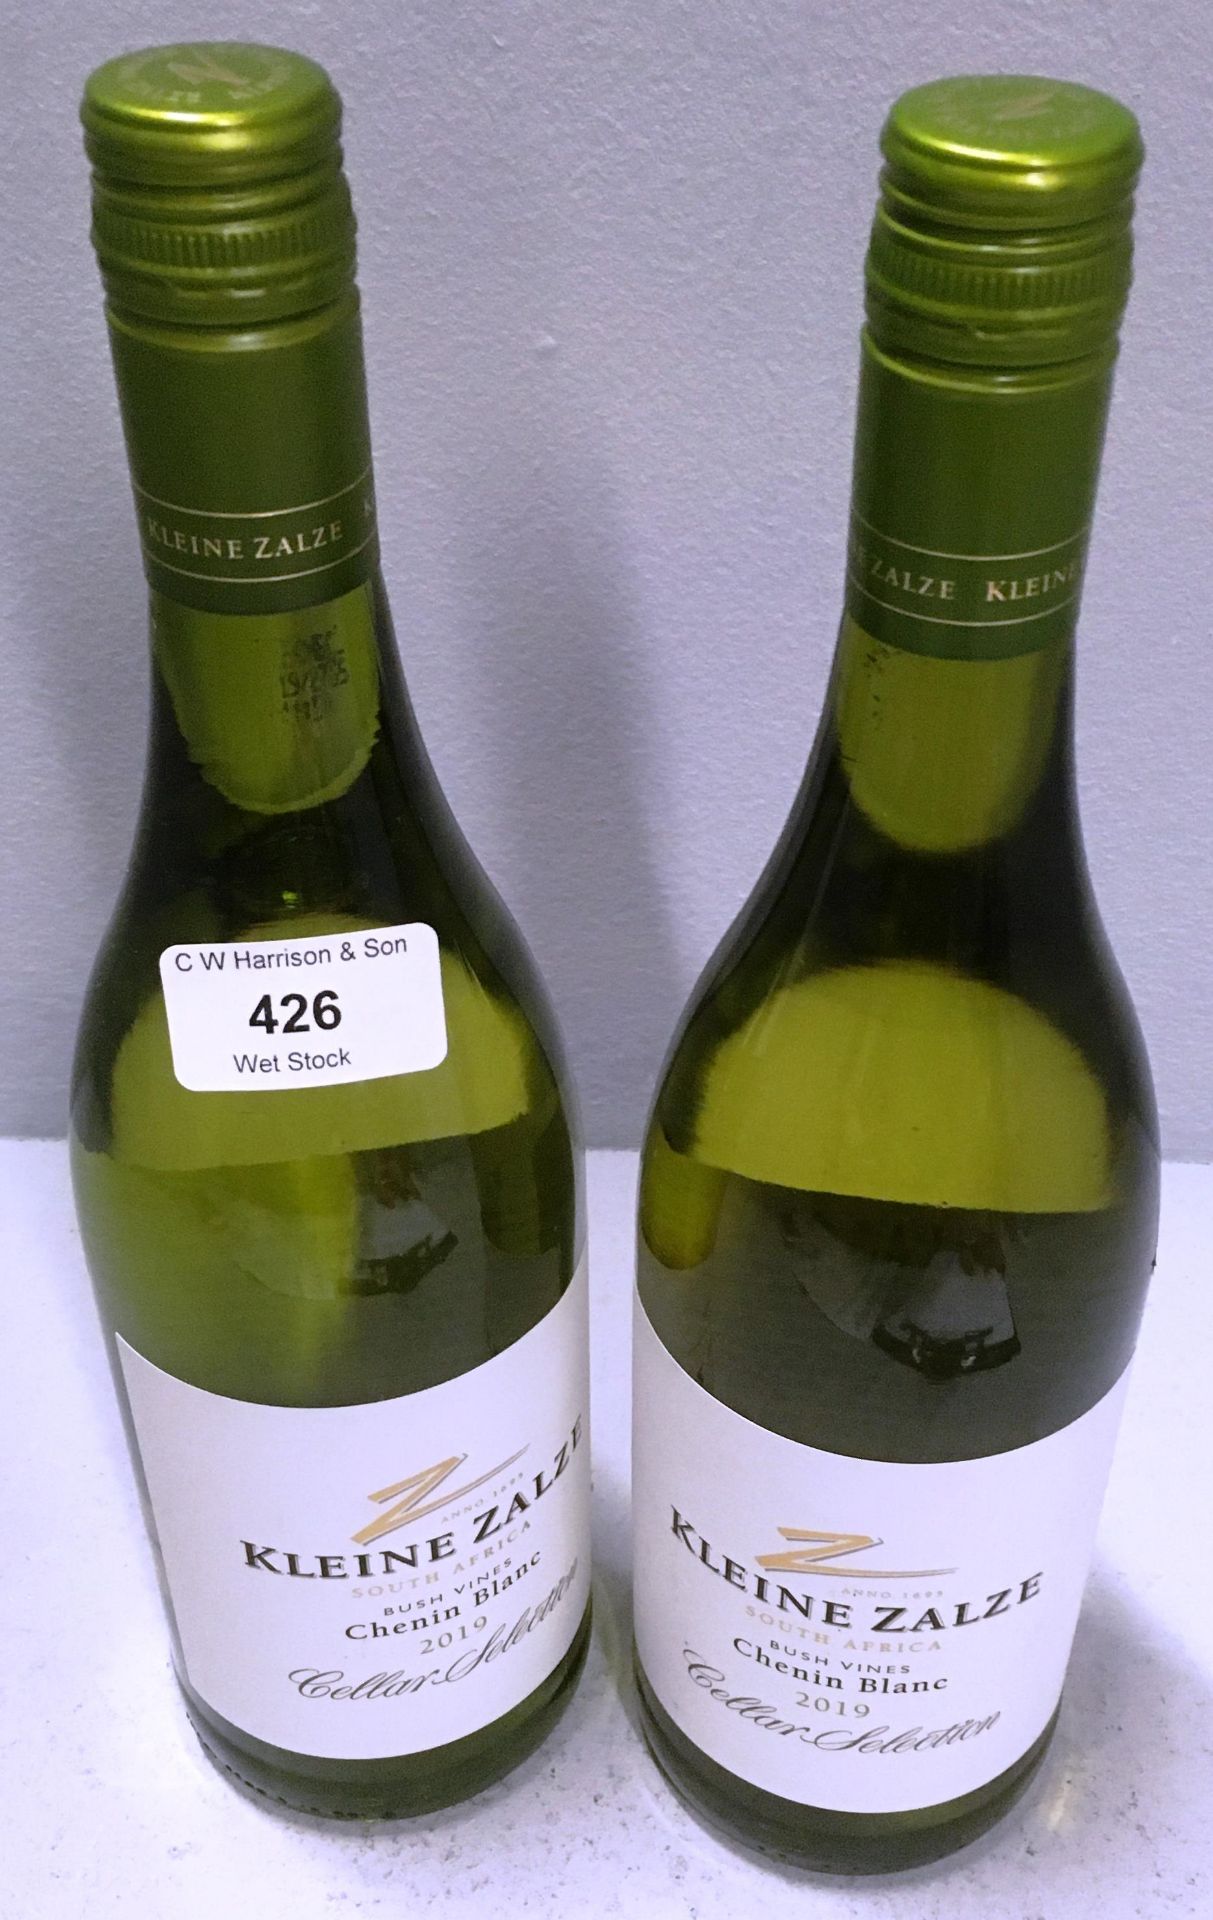 8 x 750ml bottles of Kleine Zalze South Africa Bush Vines Chenin Blanc 2019 Cellar Selection wine